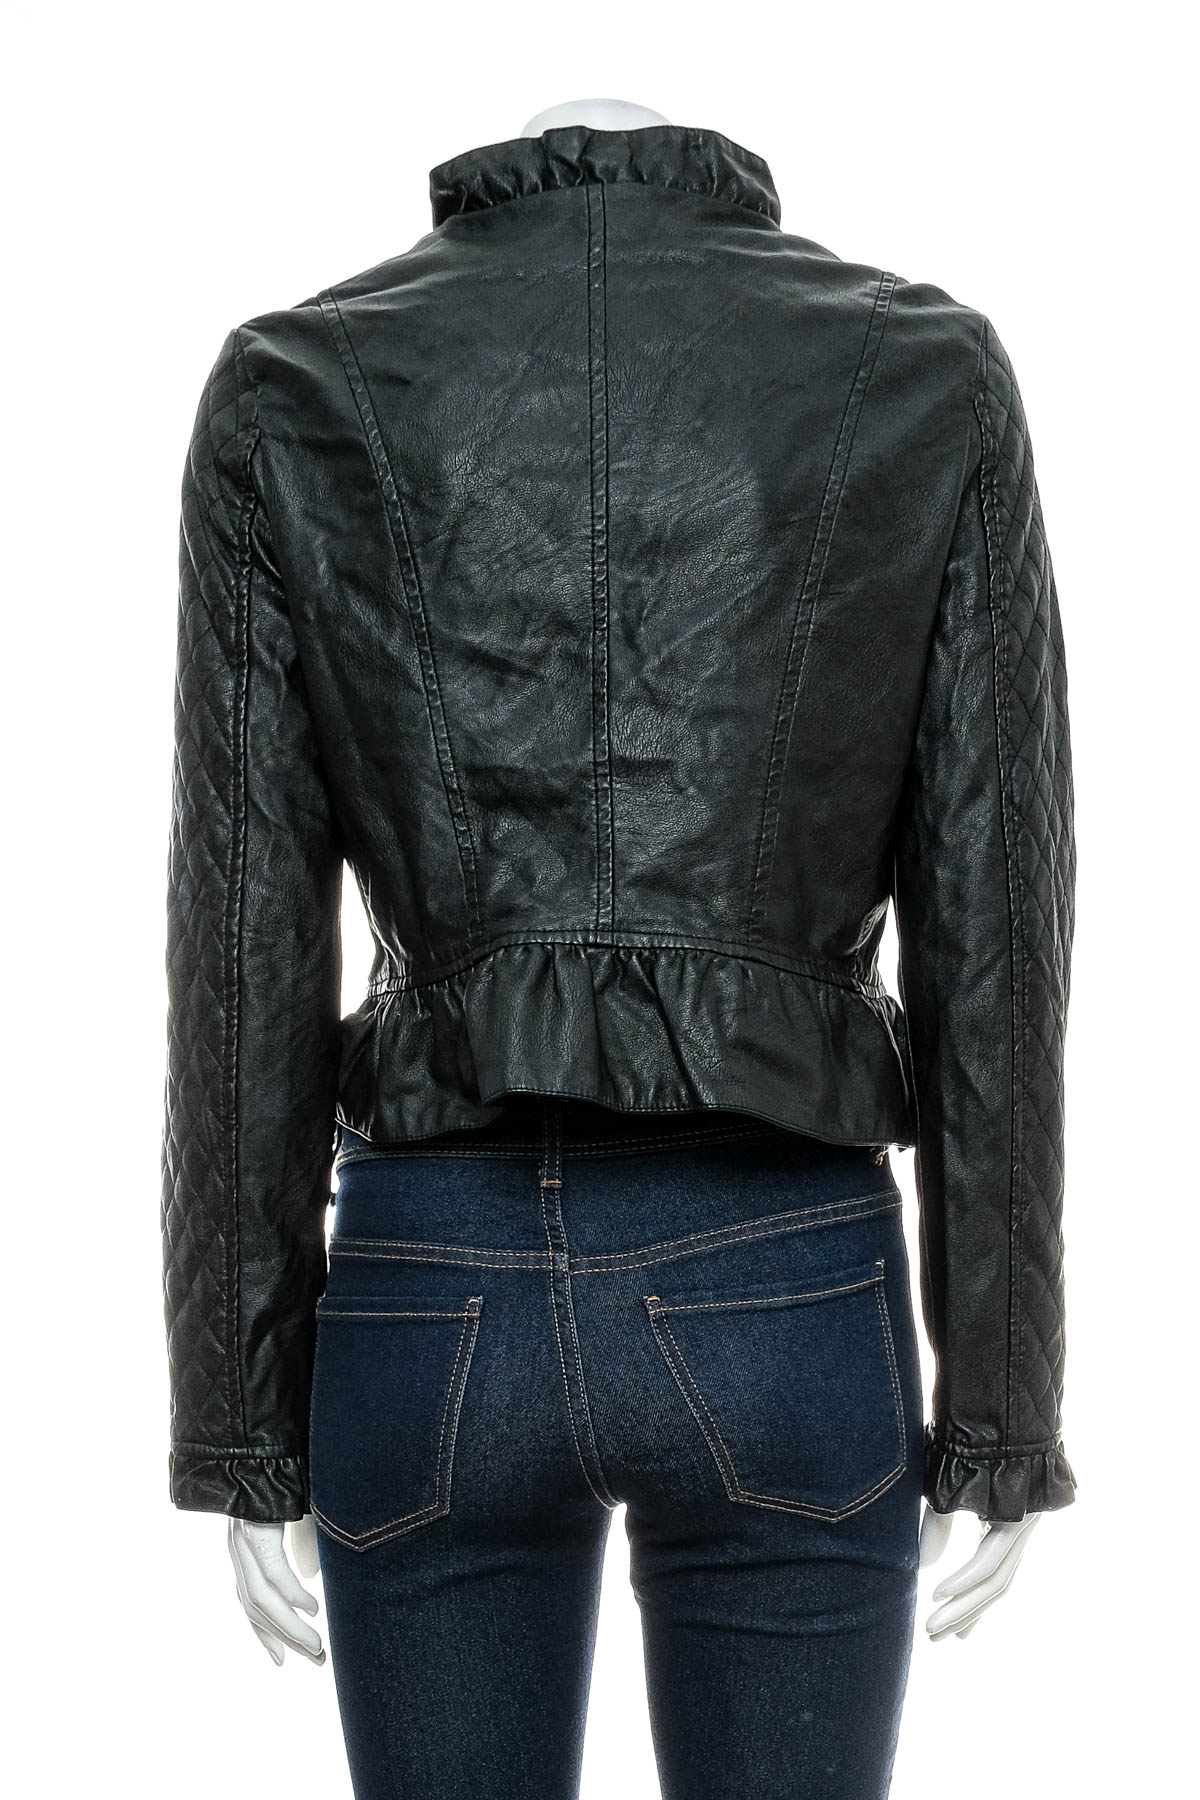 Women's leather jacket - Nuna Lie - 1